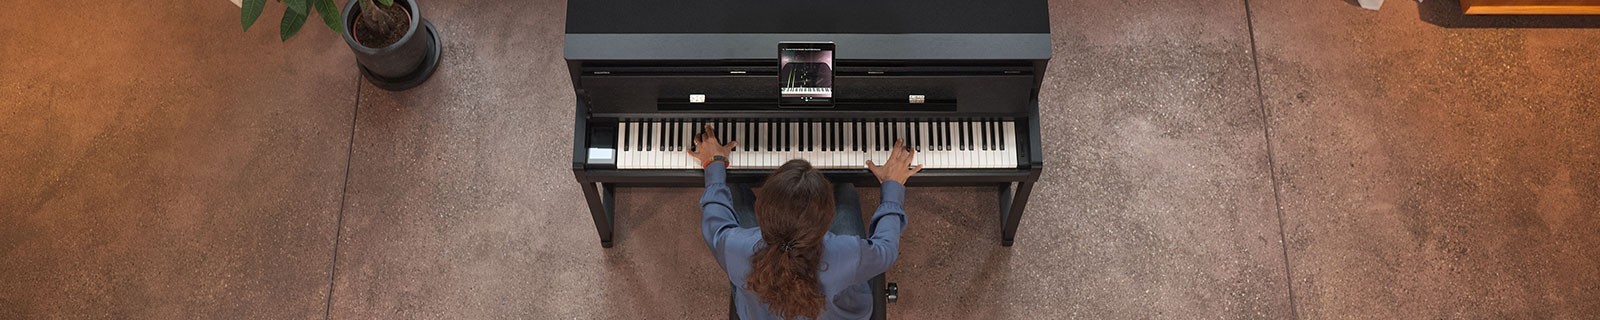 Digital pianos | Electric pianos